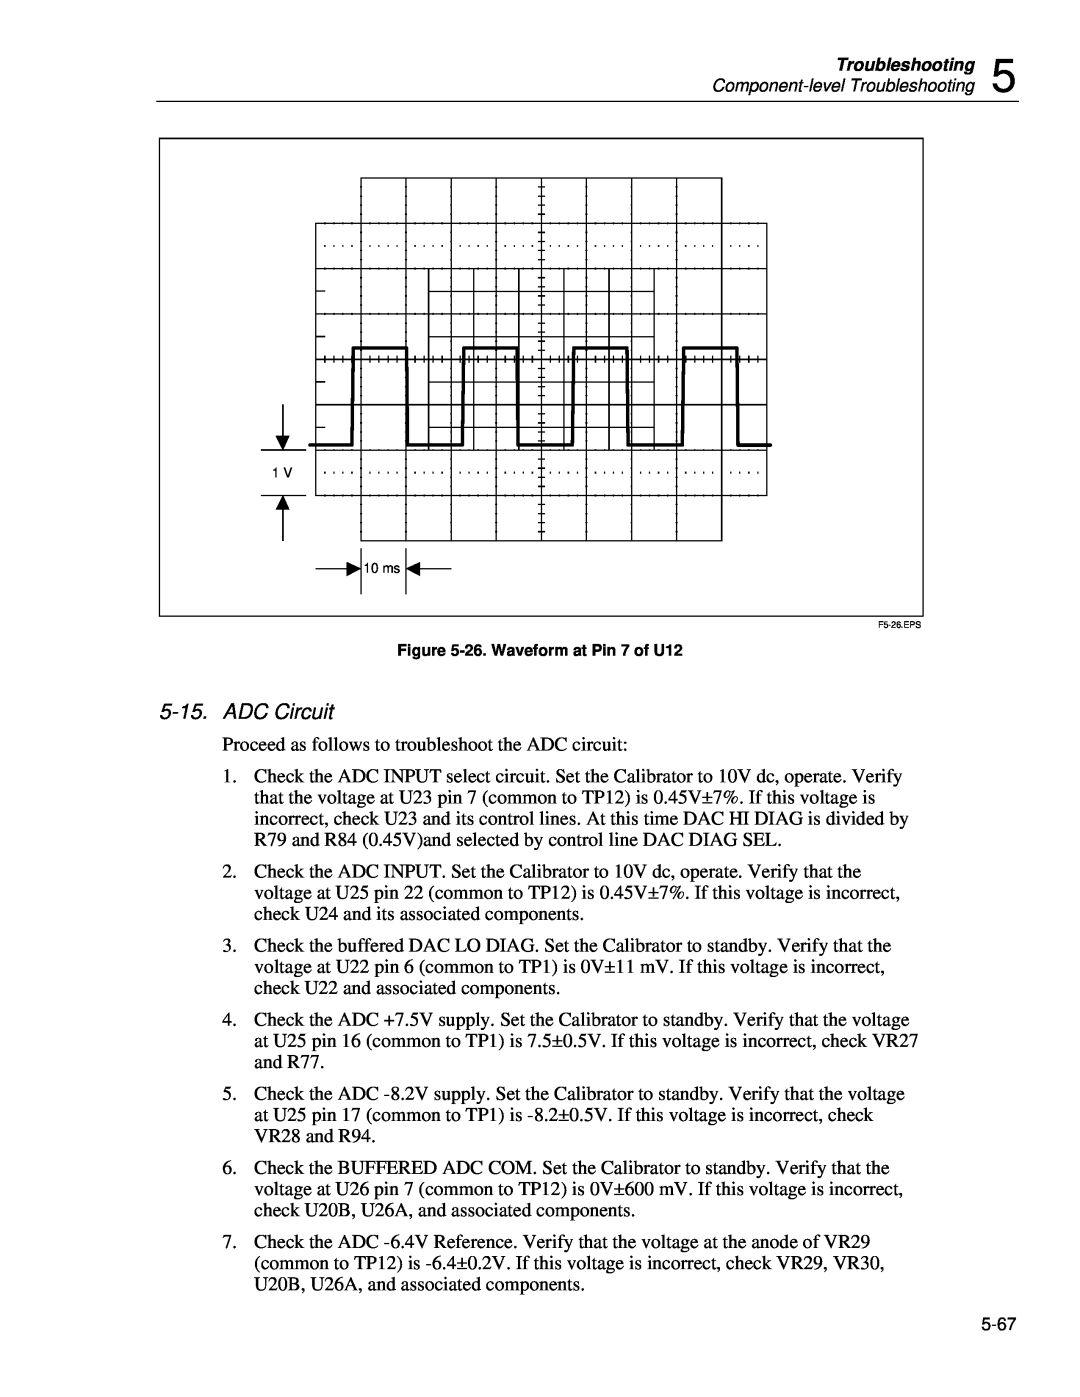 Fluke 5720A service manual ADC Circuit 